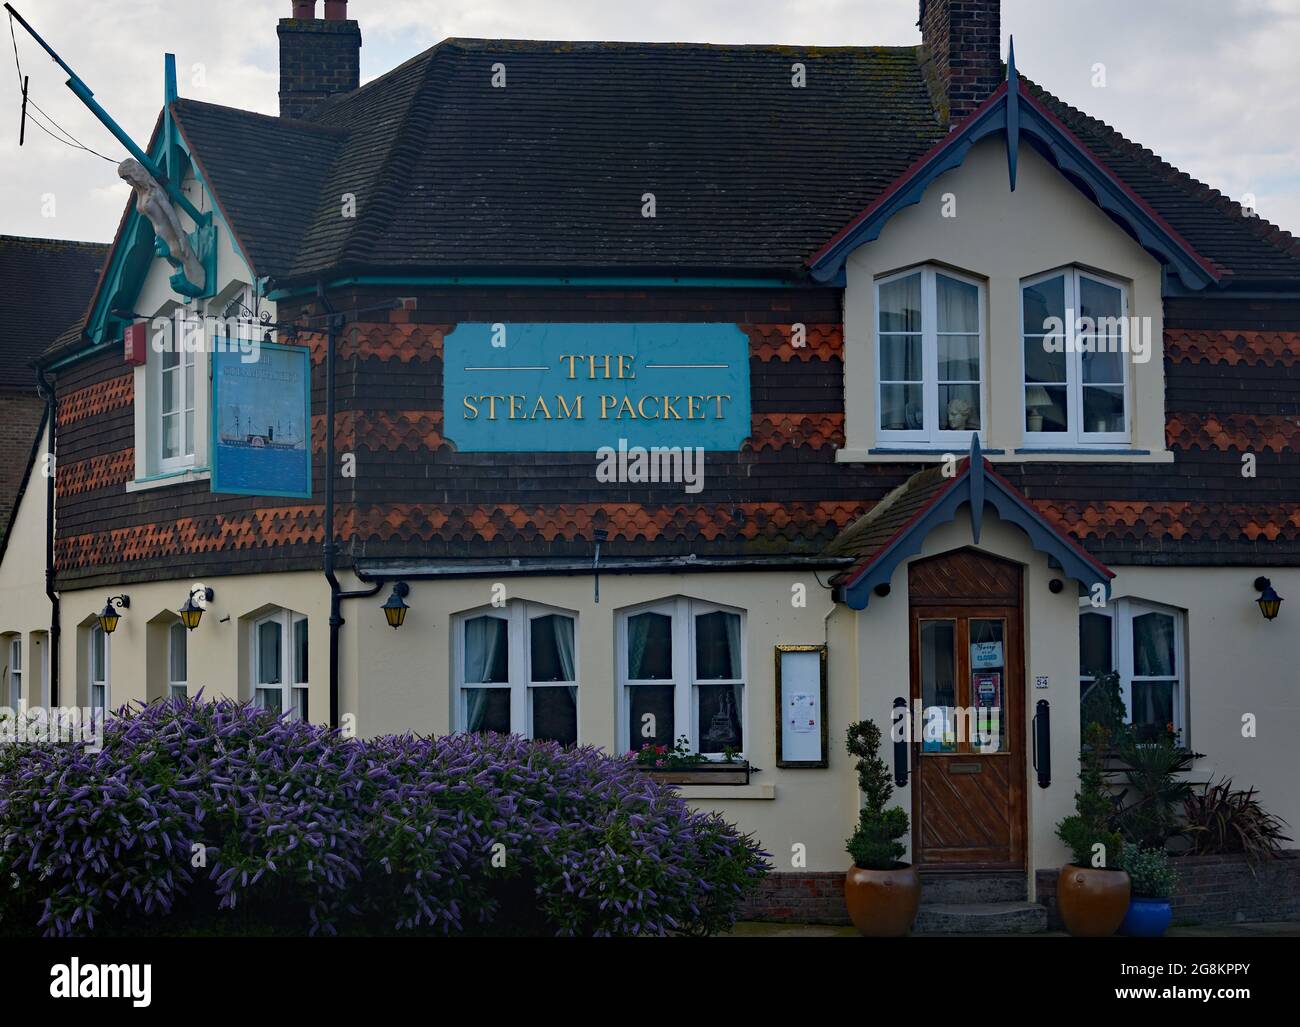 The Steam Packet pub in Littlehampton, UK. Stock Photo